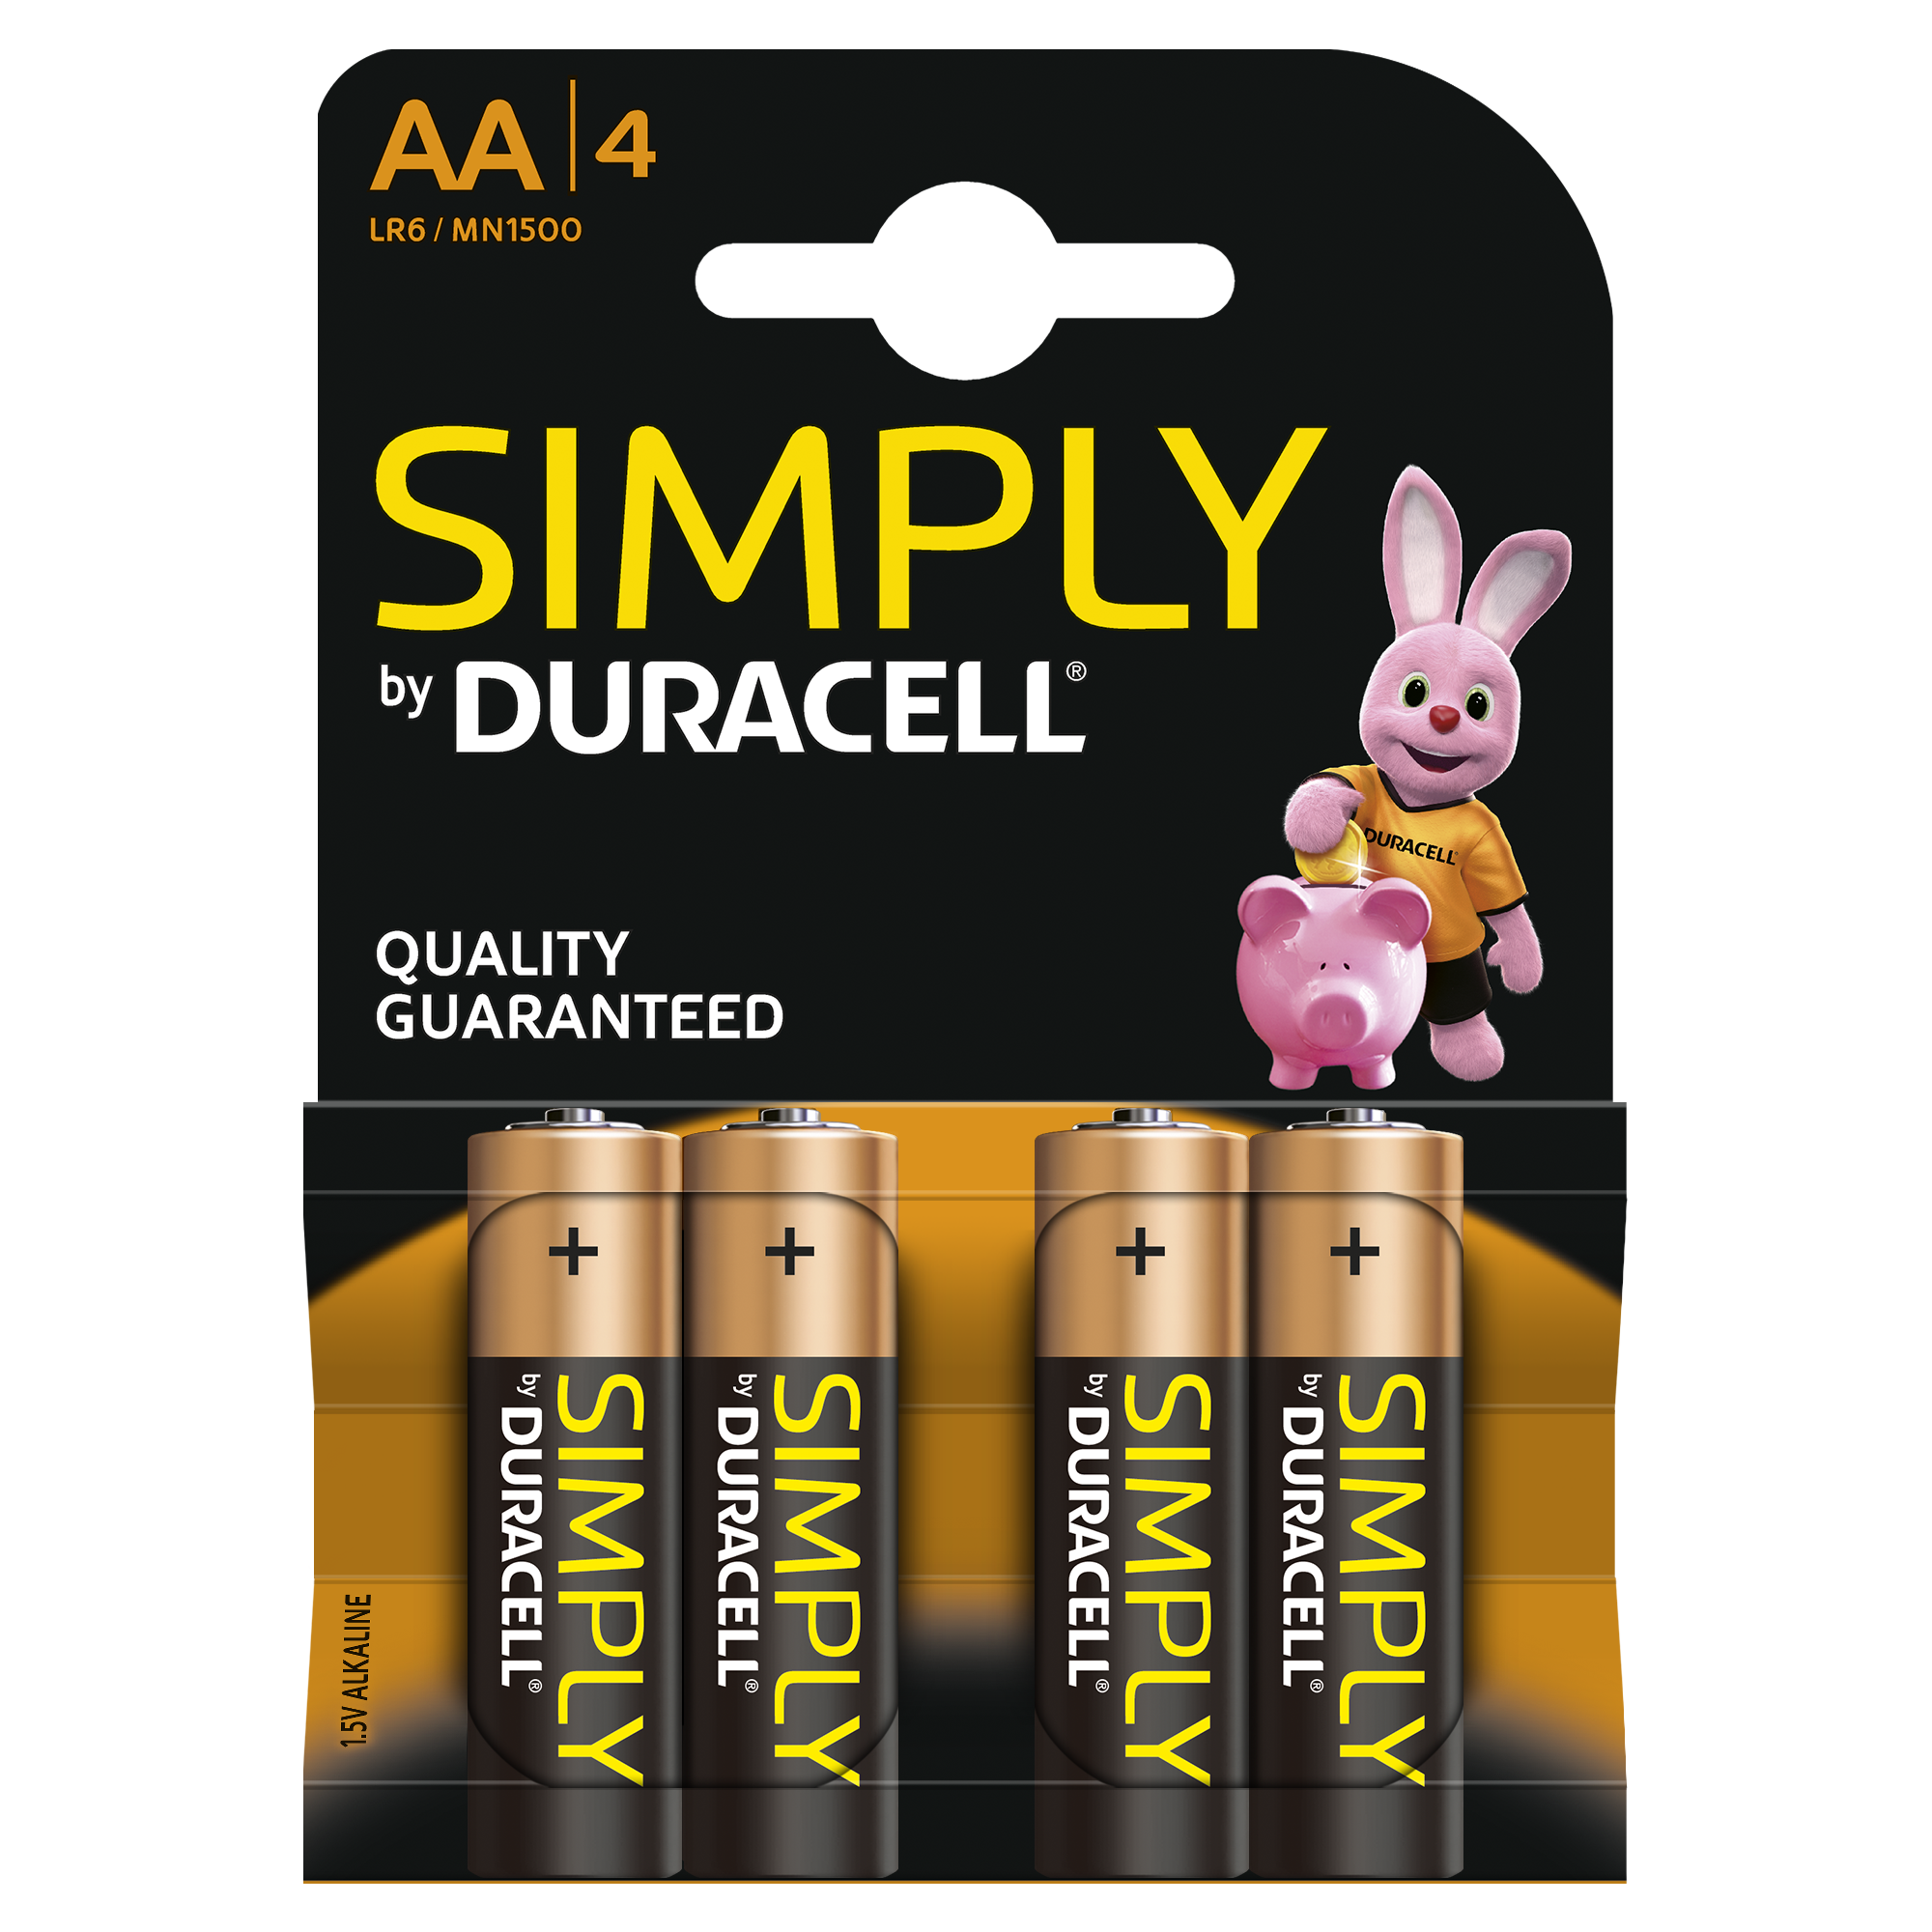 Duracell LR6 4-BL Duracell Simply